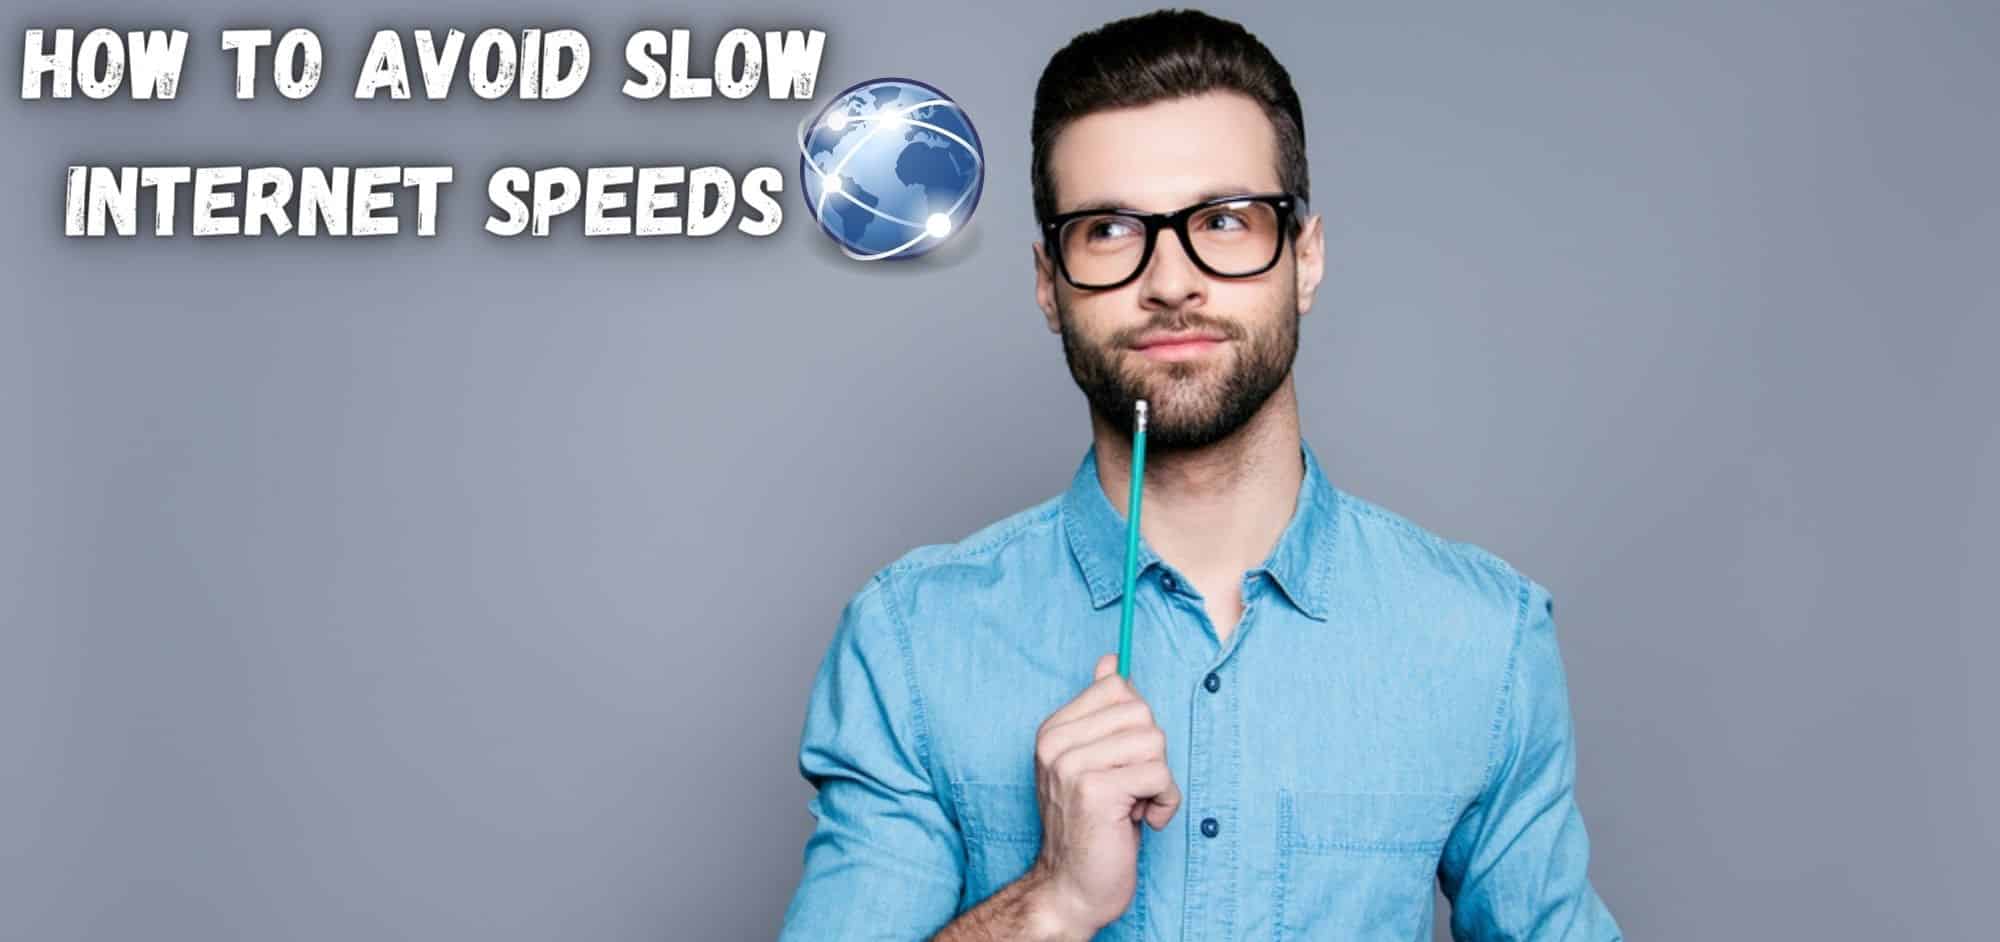 How to Avoid Slow Internet Speeds